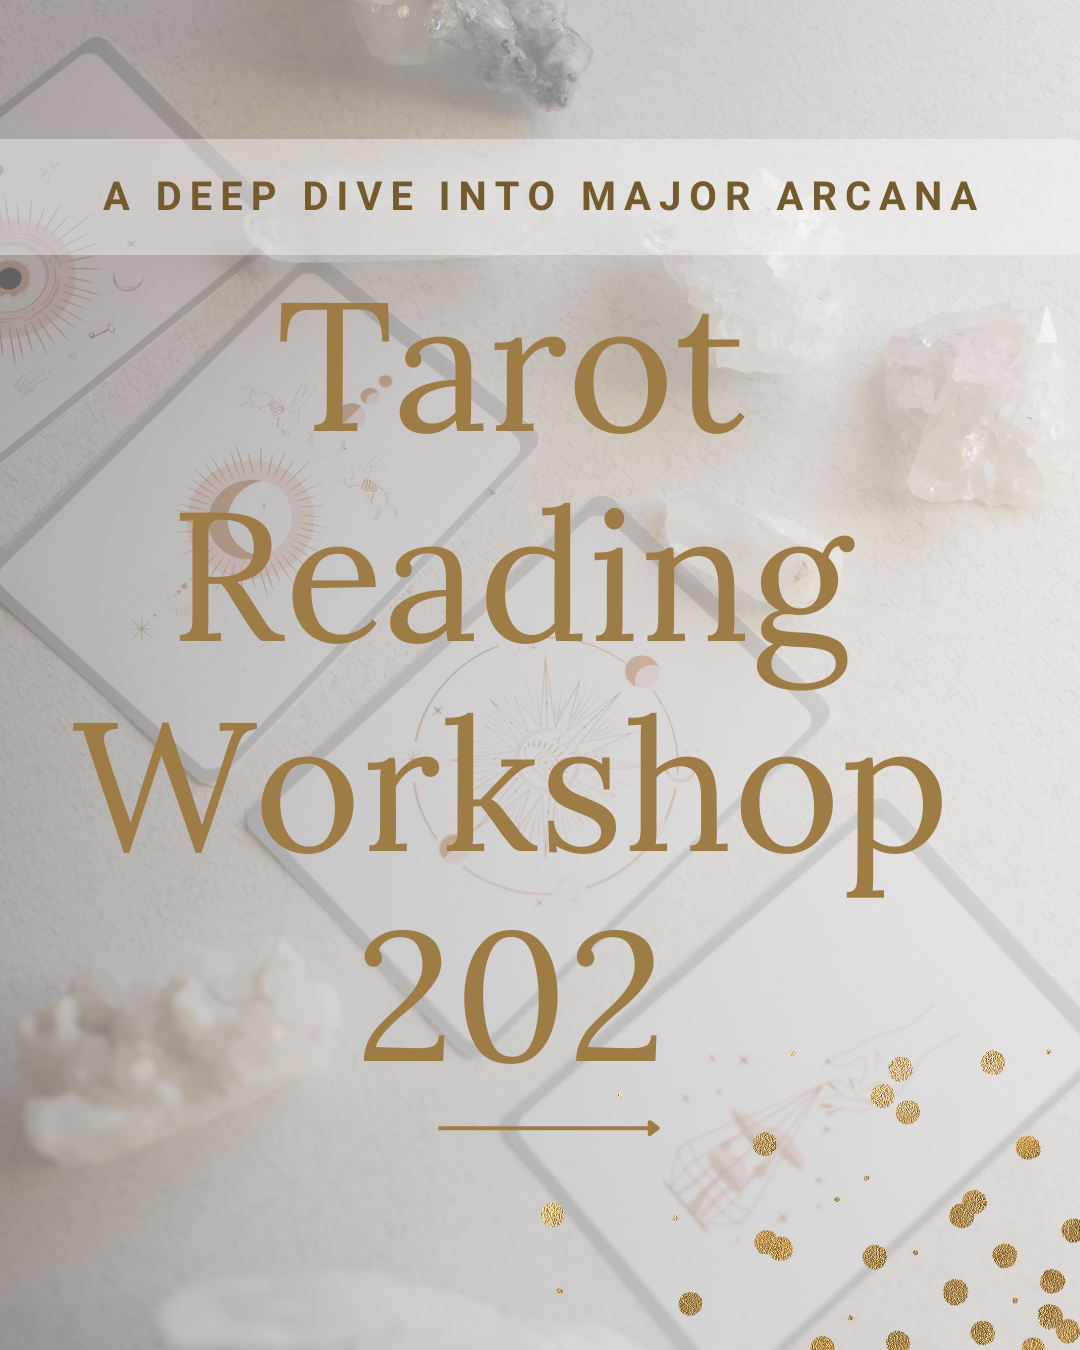 Tarot Reading Workshop 202: A Deep Dive into Major Arcana